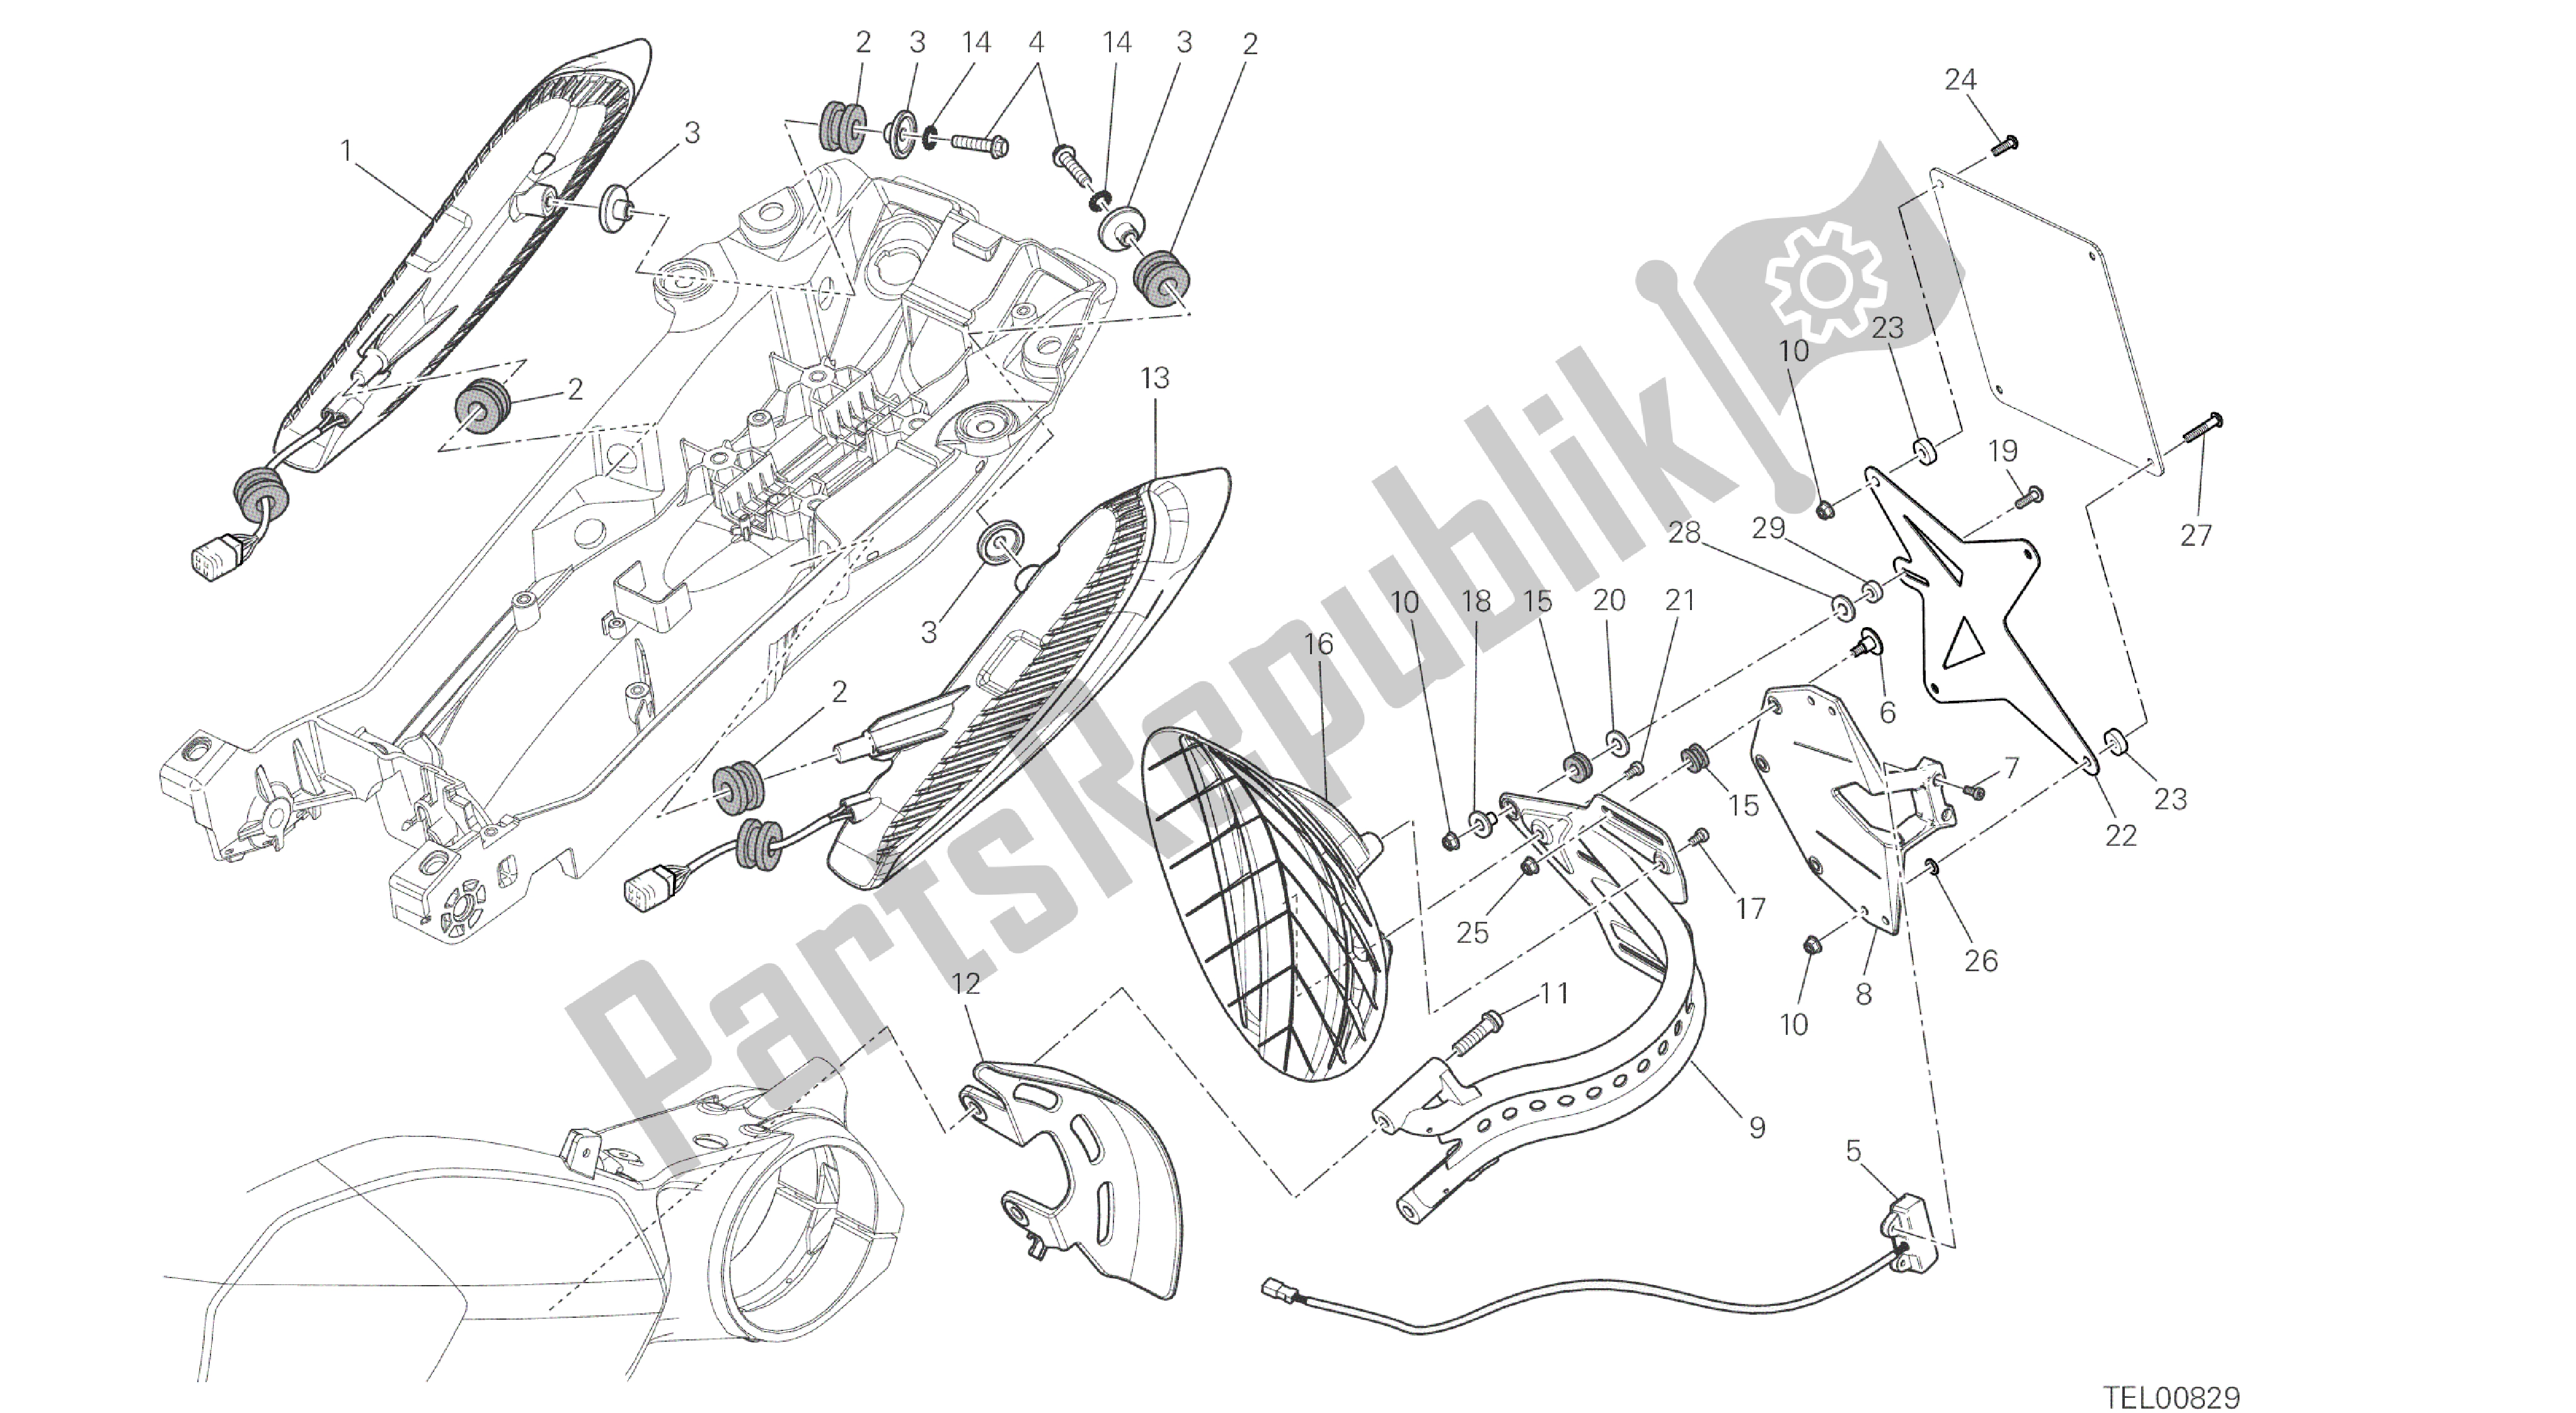 Todas las partes para Dibujo 27a - Soporte De Matrícula - Luz Trasera [mod: Dvl; Xst: Eur, Fra, Jap, Tha] de Ducati Diavel 1200 2016